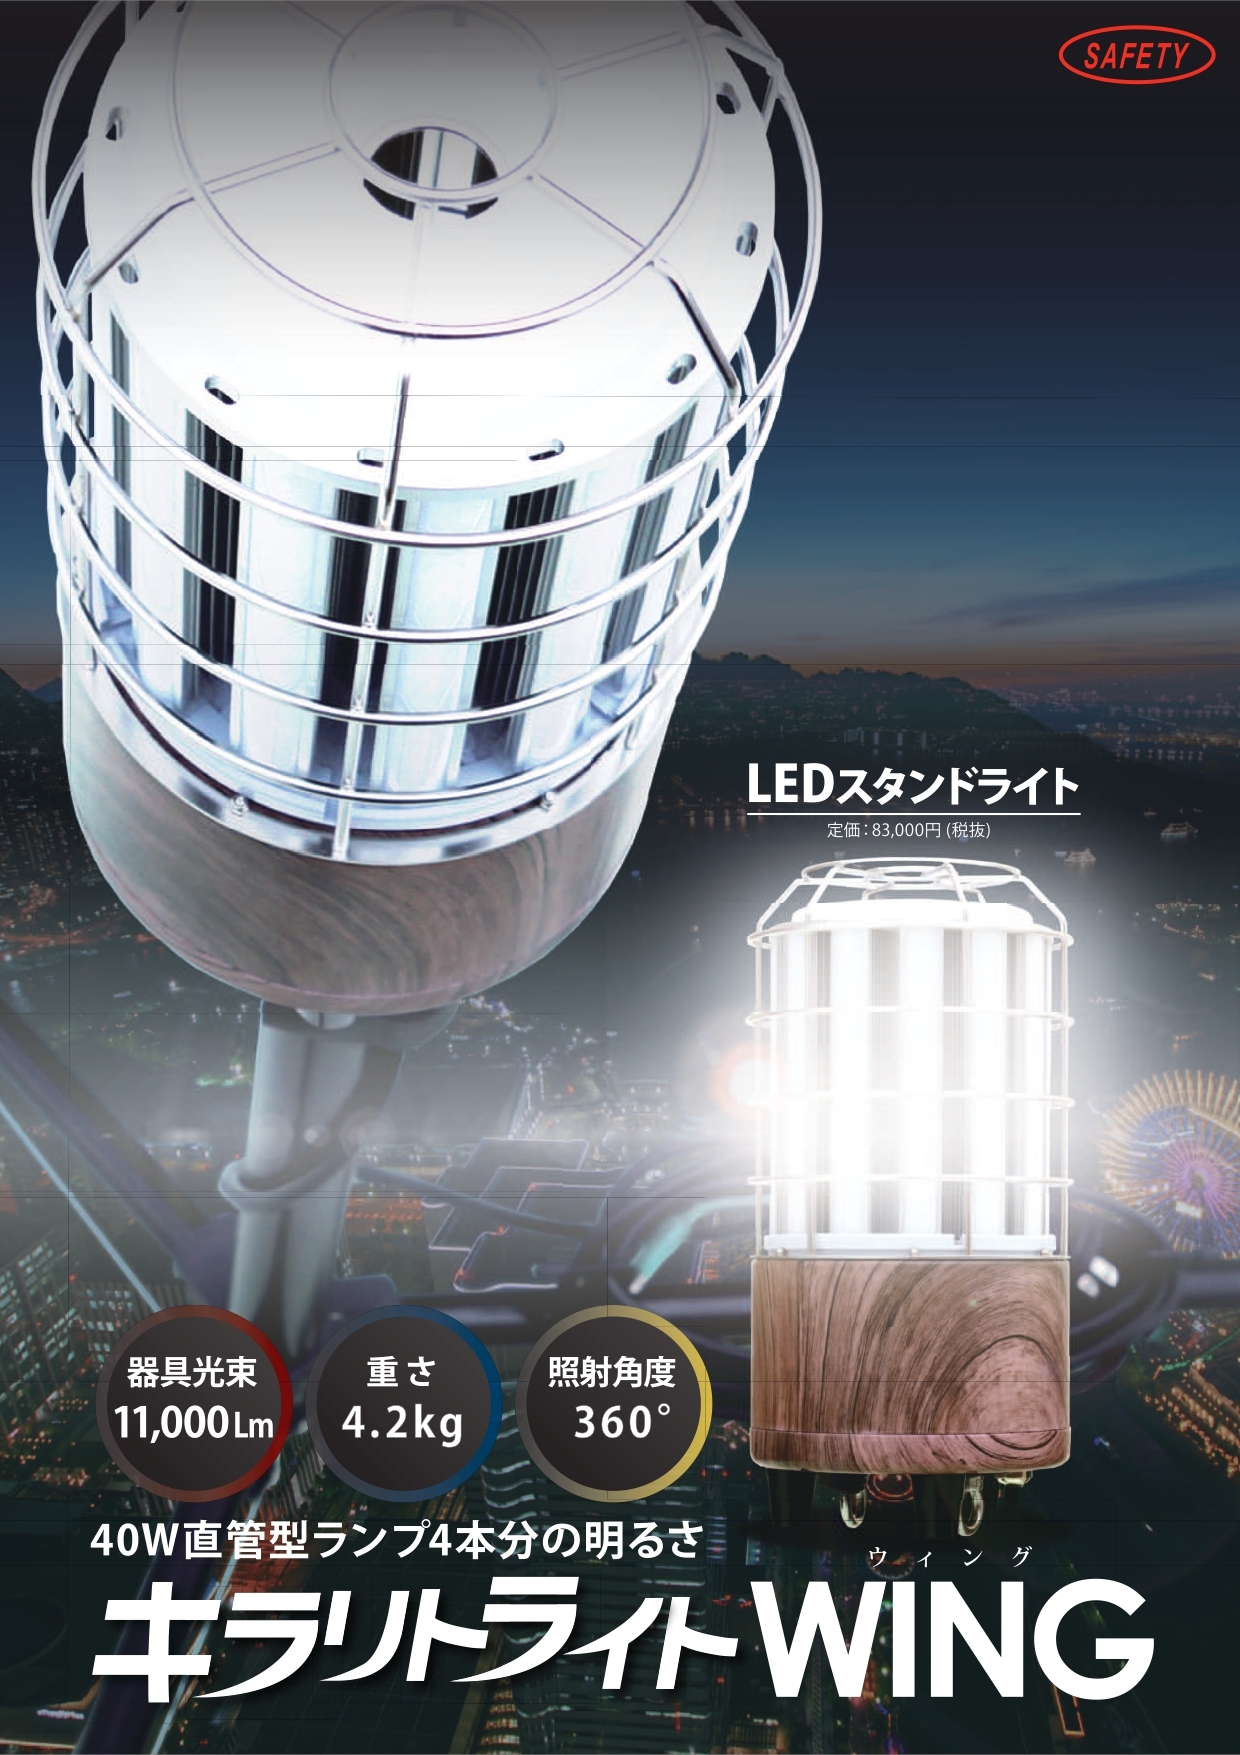 SALE グッドグッズ LED作業灯 100W 円柱型 投光器 ライト 360° 三脚スタンド 照明 LED 携帯型 収納バッグ付 複数連結 現場作業 屋外 防水 防雨 高輝度 GD-100W - 3